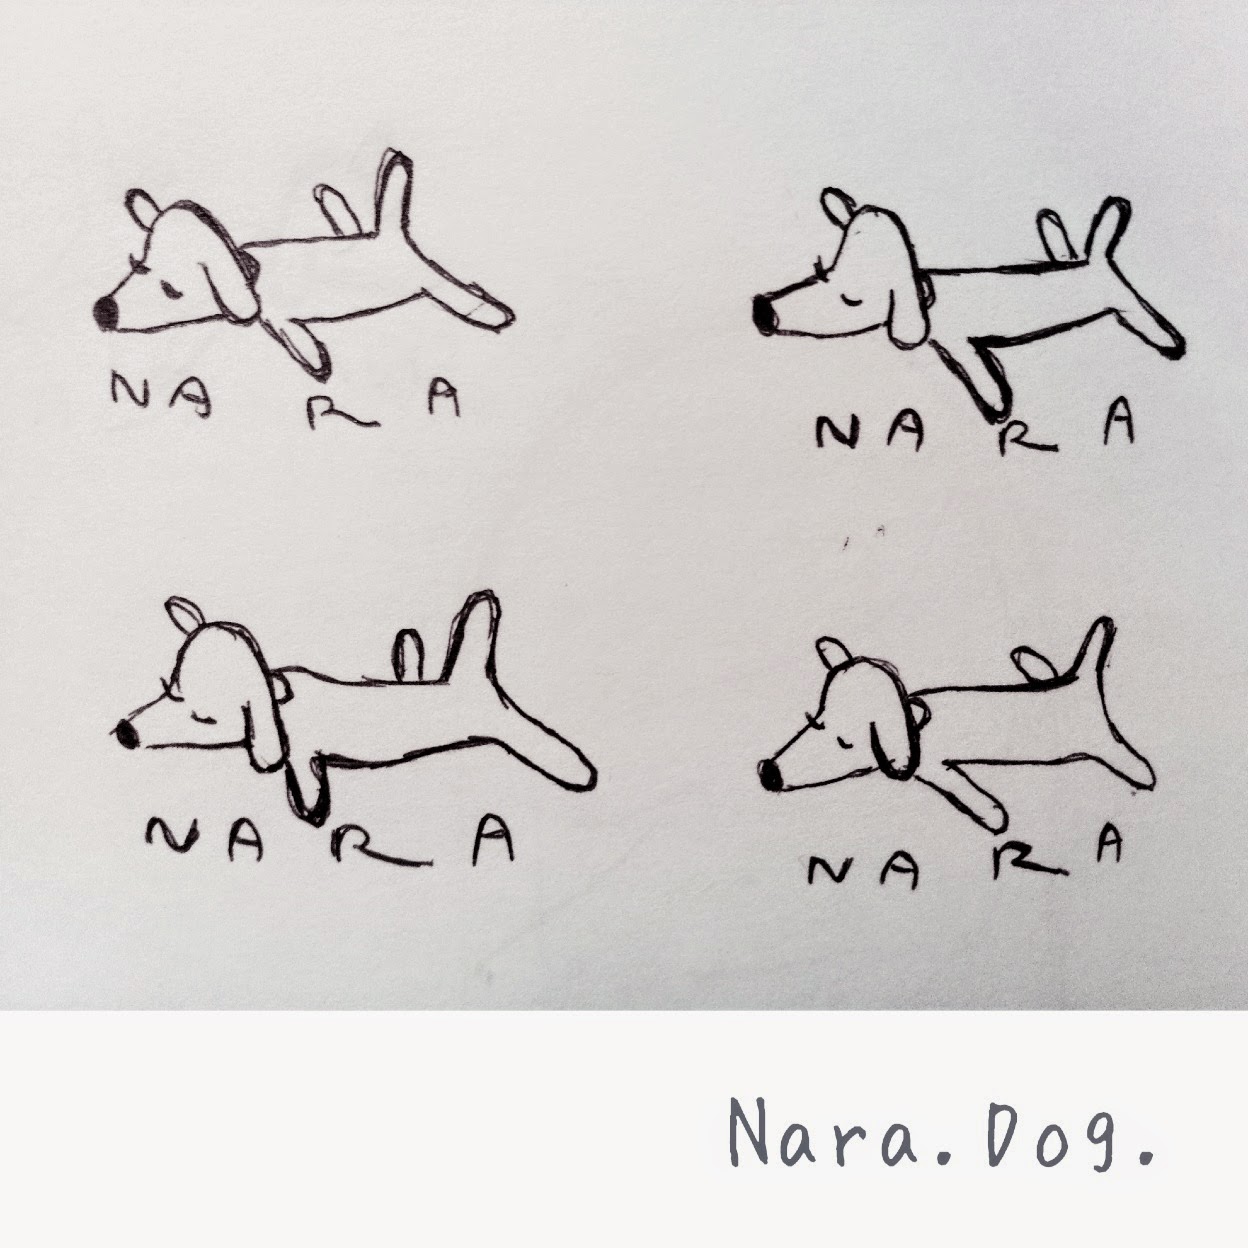 Nara dog